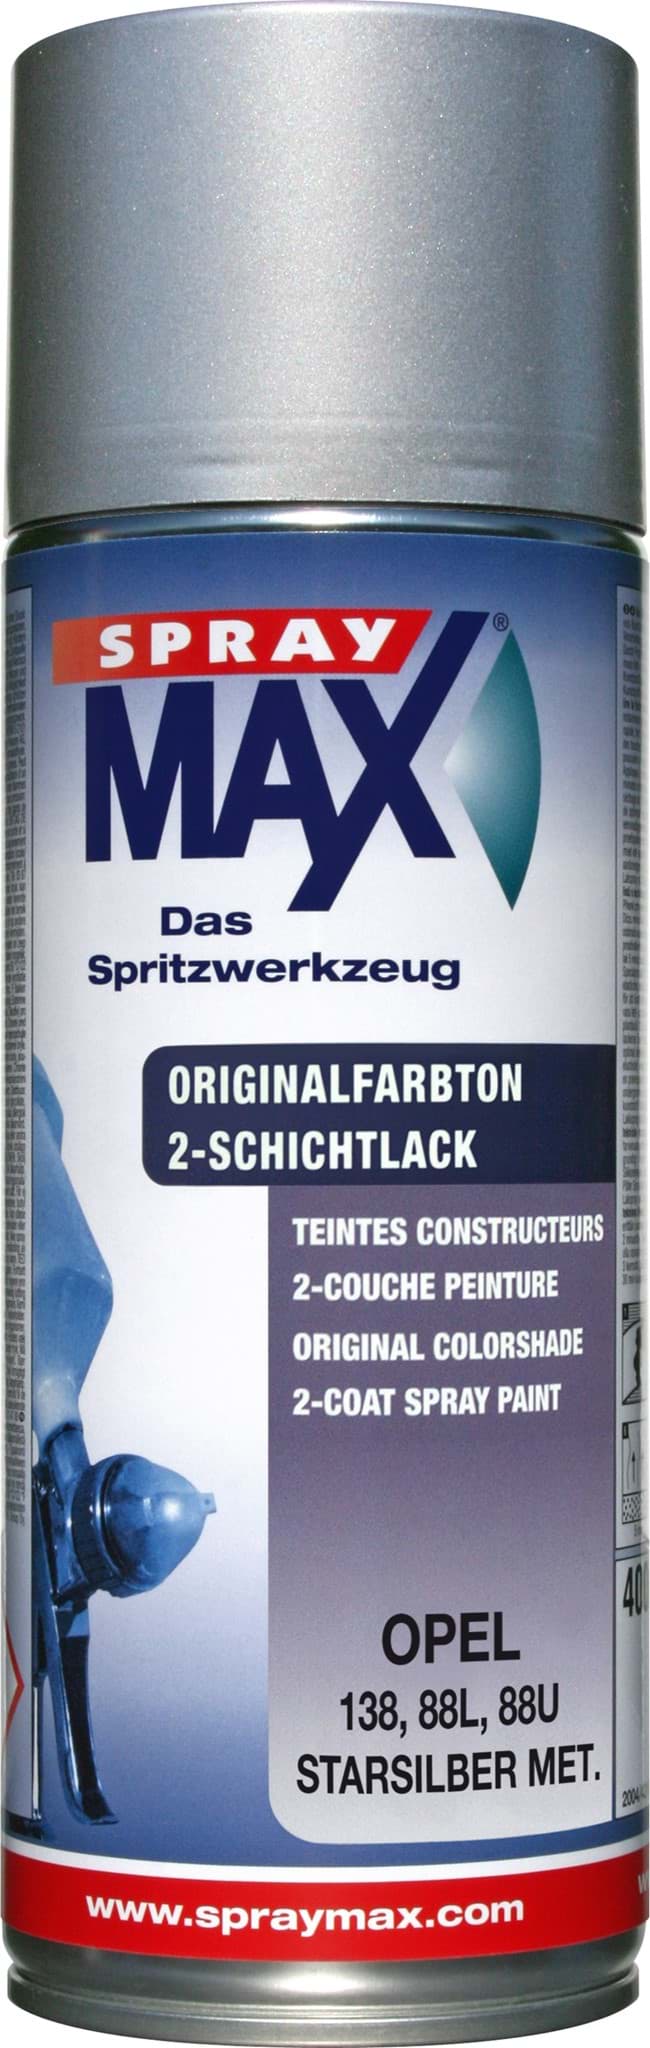 Obraz SprayMax Originalfarbton für Opel 138 starsilber met.